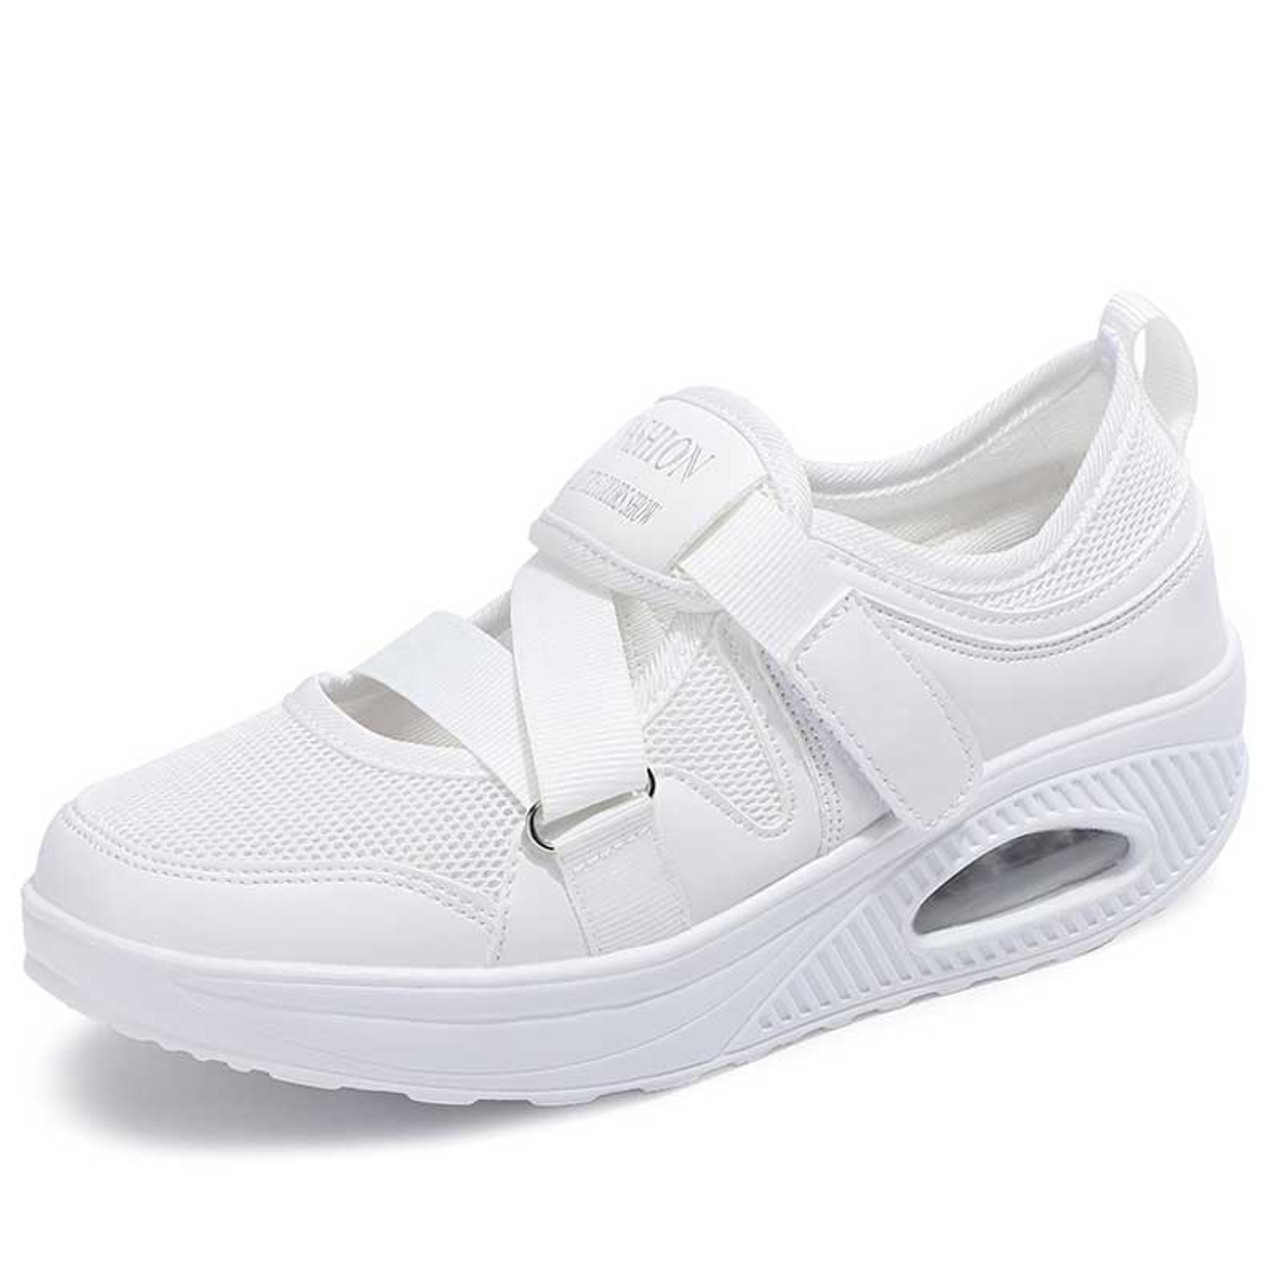 White velcro strap low cut slip on rocker bottom sneaker